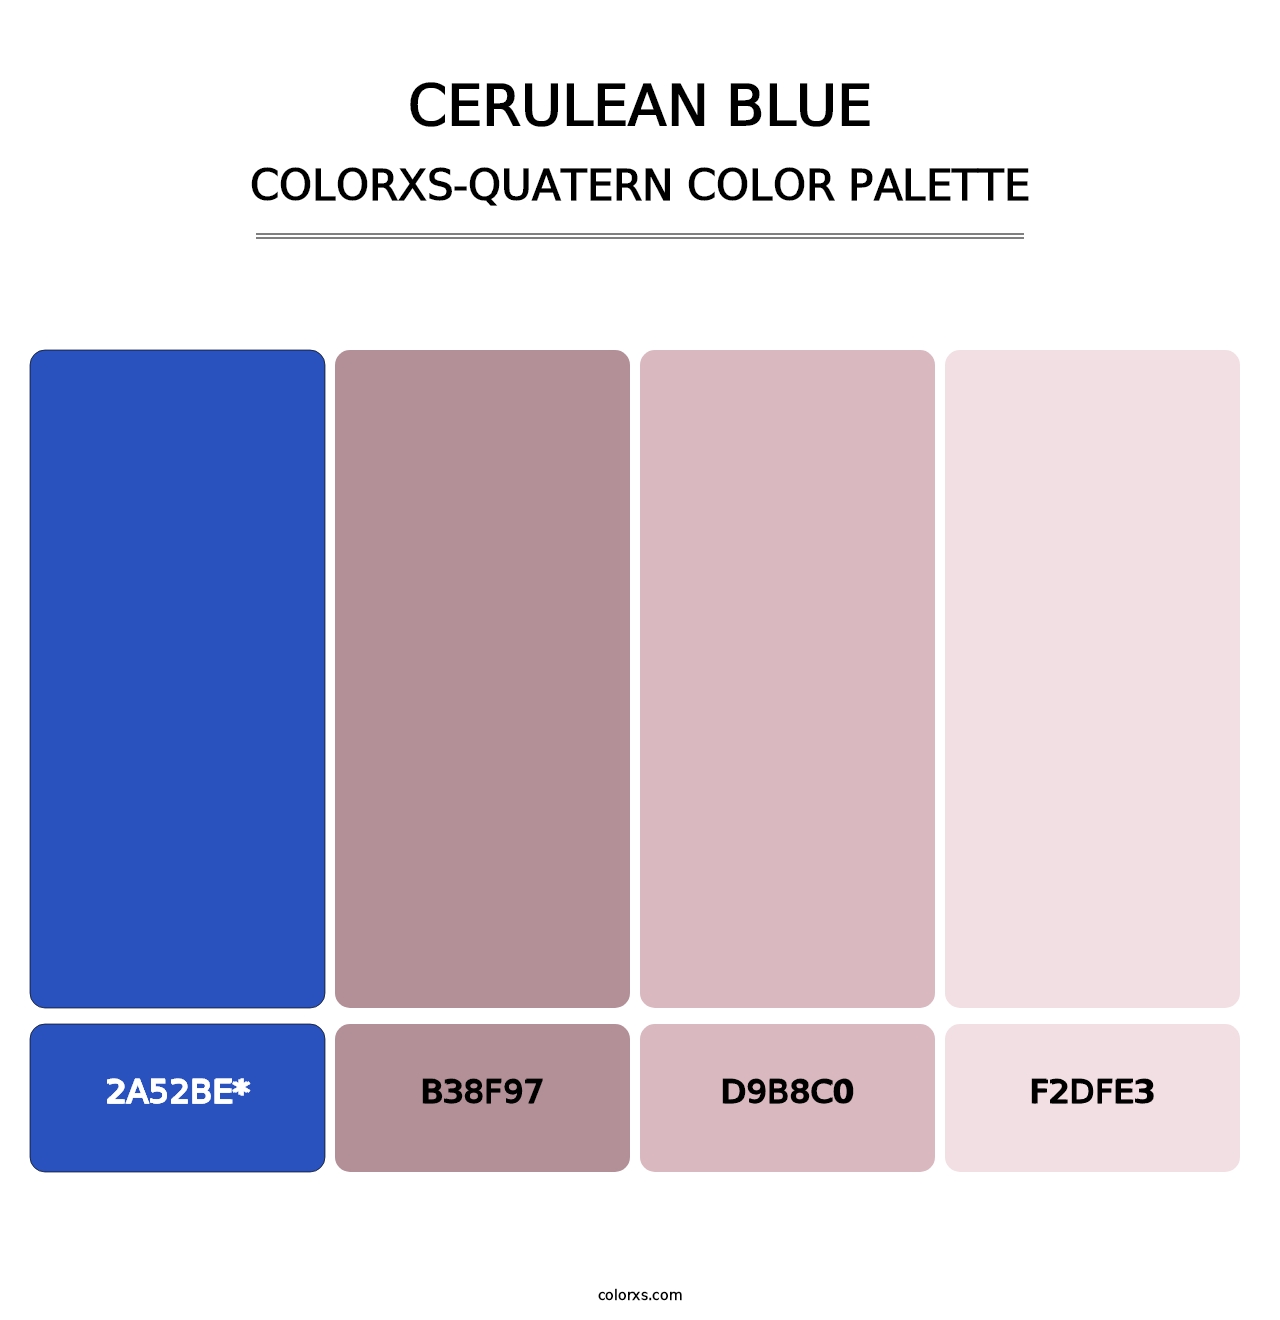 Cerulean blue - Colorxs Quatern Palette